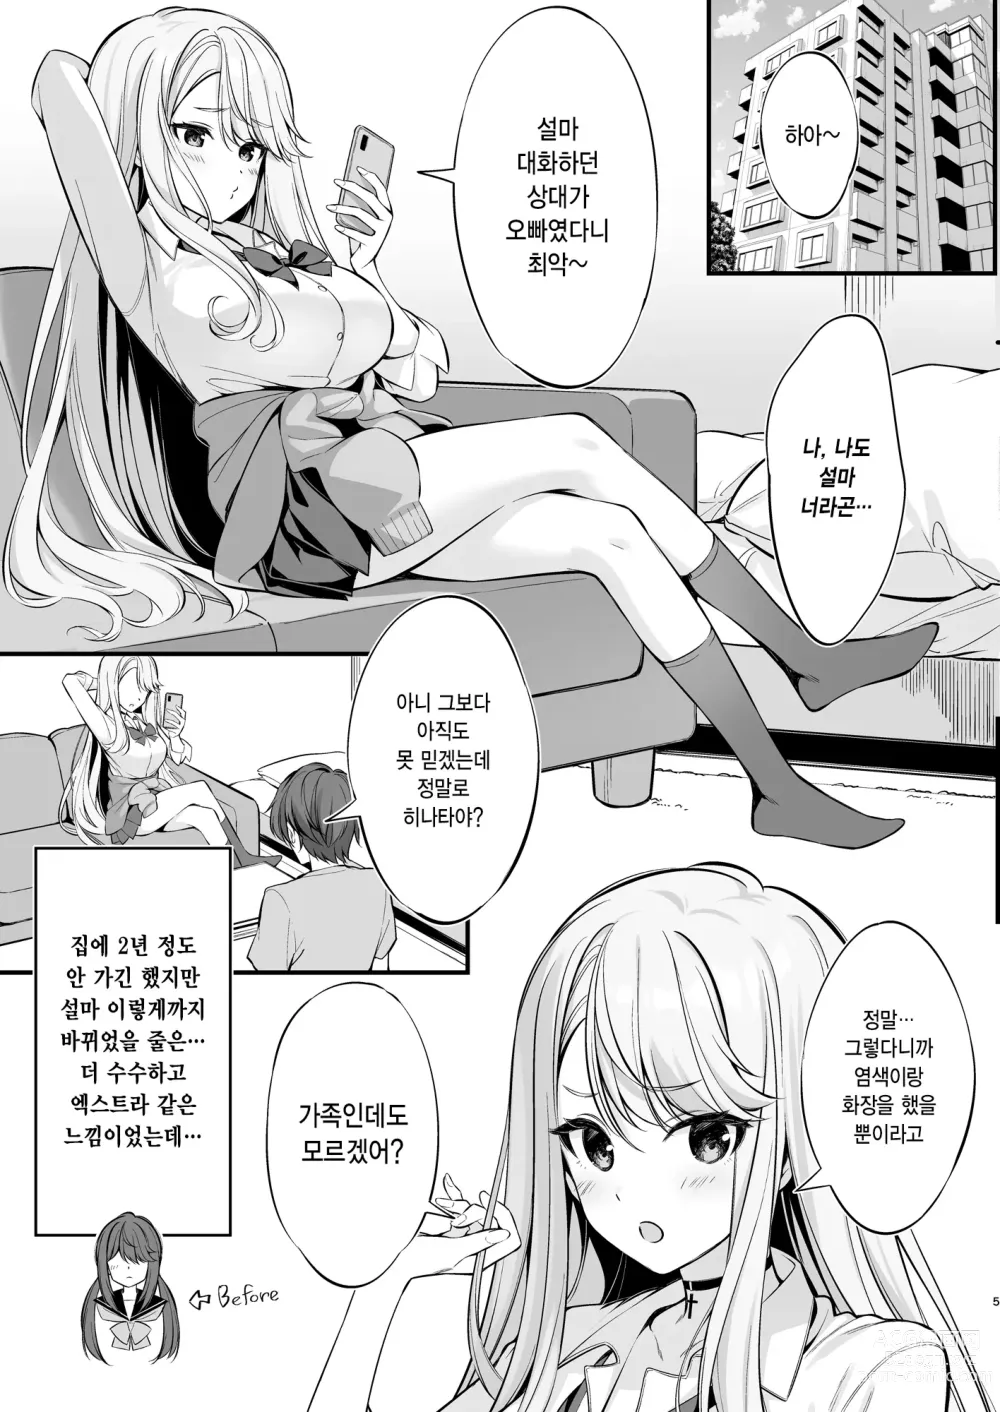 Page 4 of doujinshi SNS를 통해 만난 사람은 갸루가 된 여동생이었다